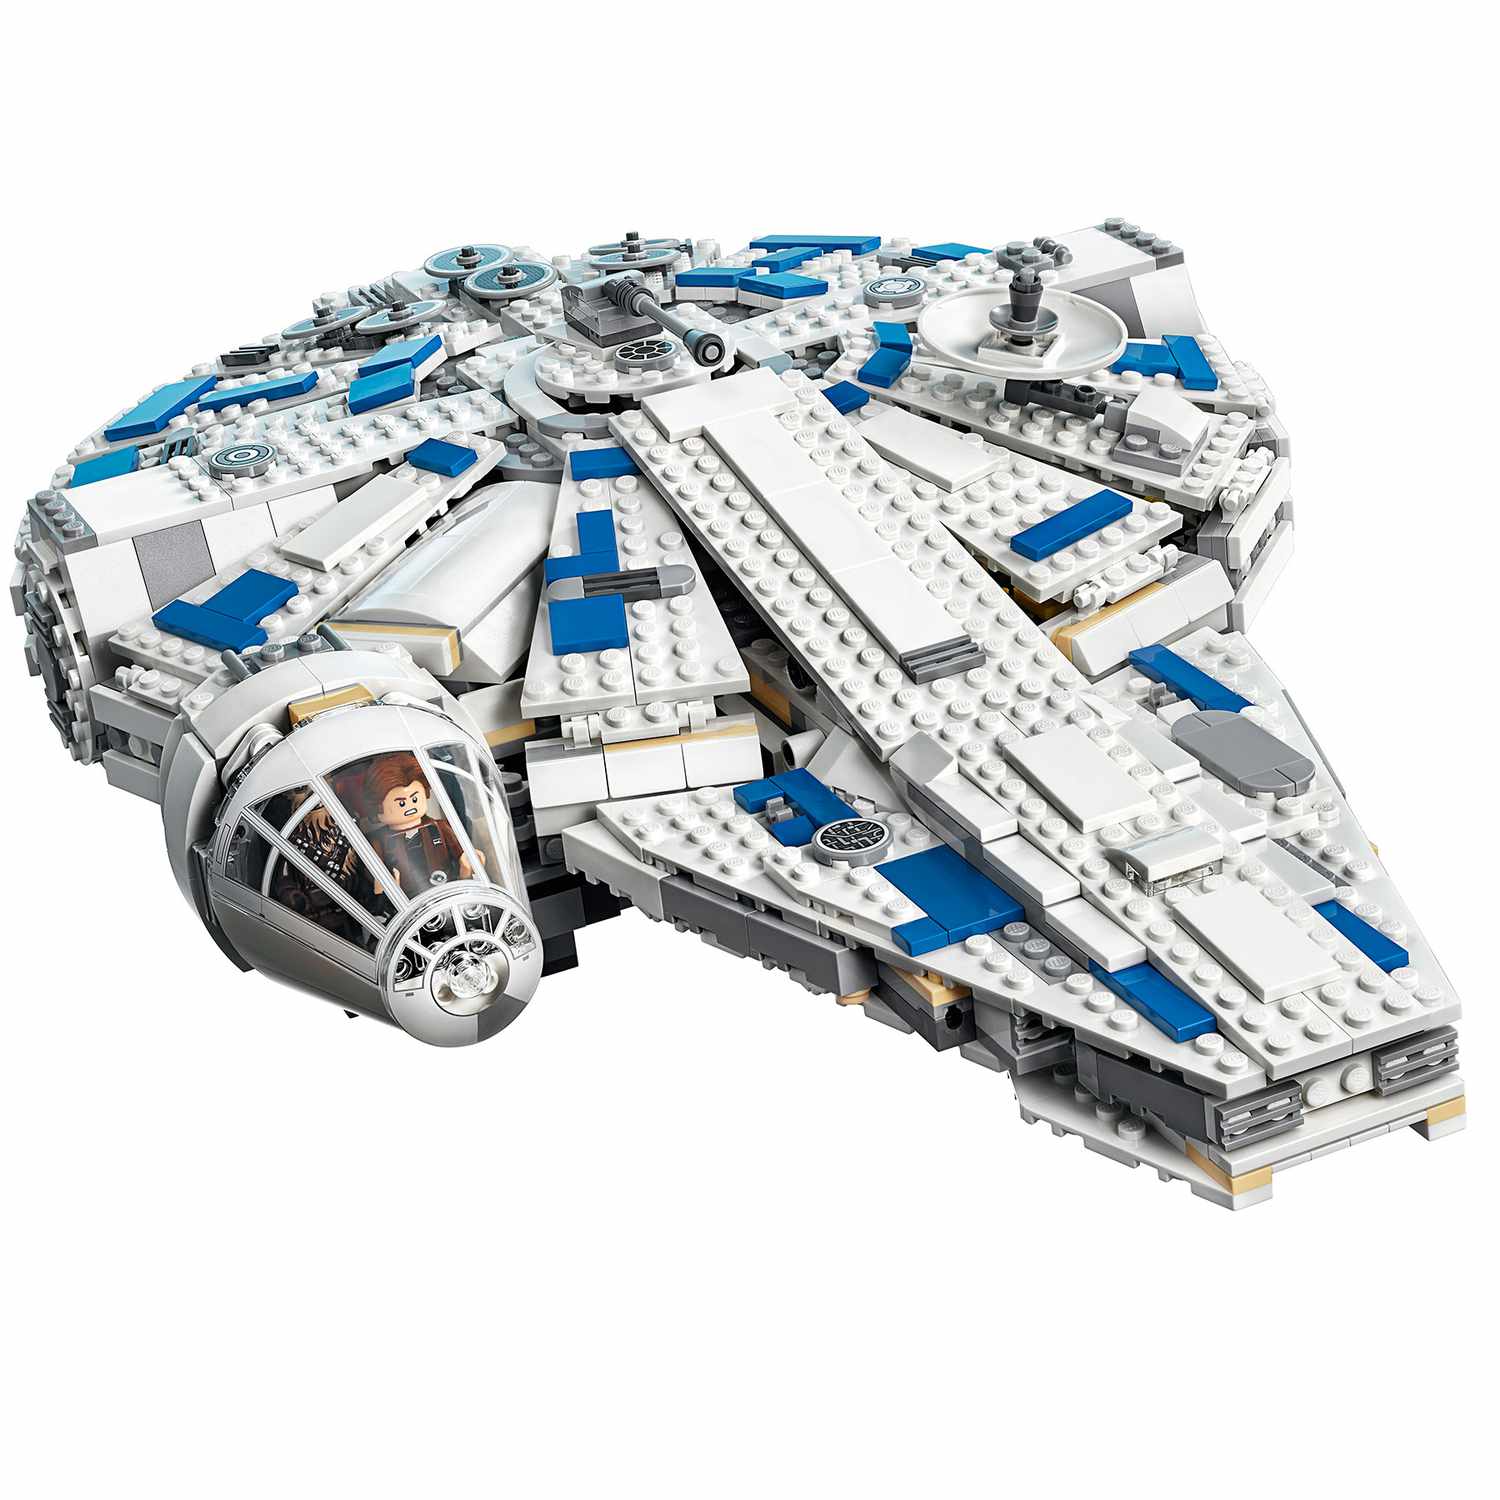 LEGO's Kessel Run Millennium Falcon